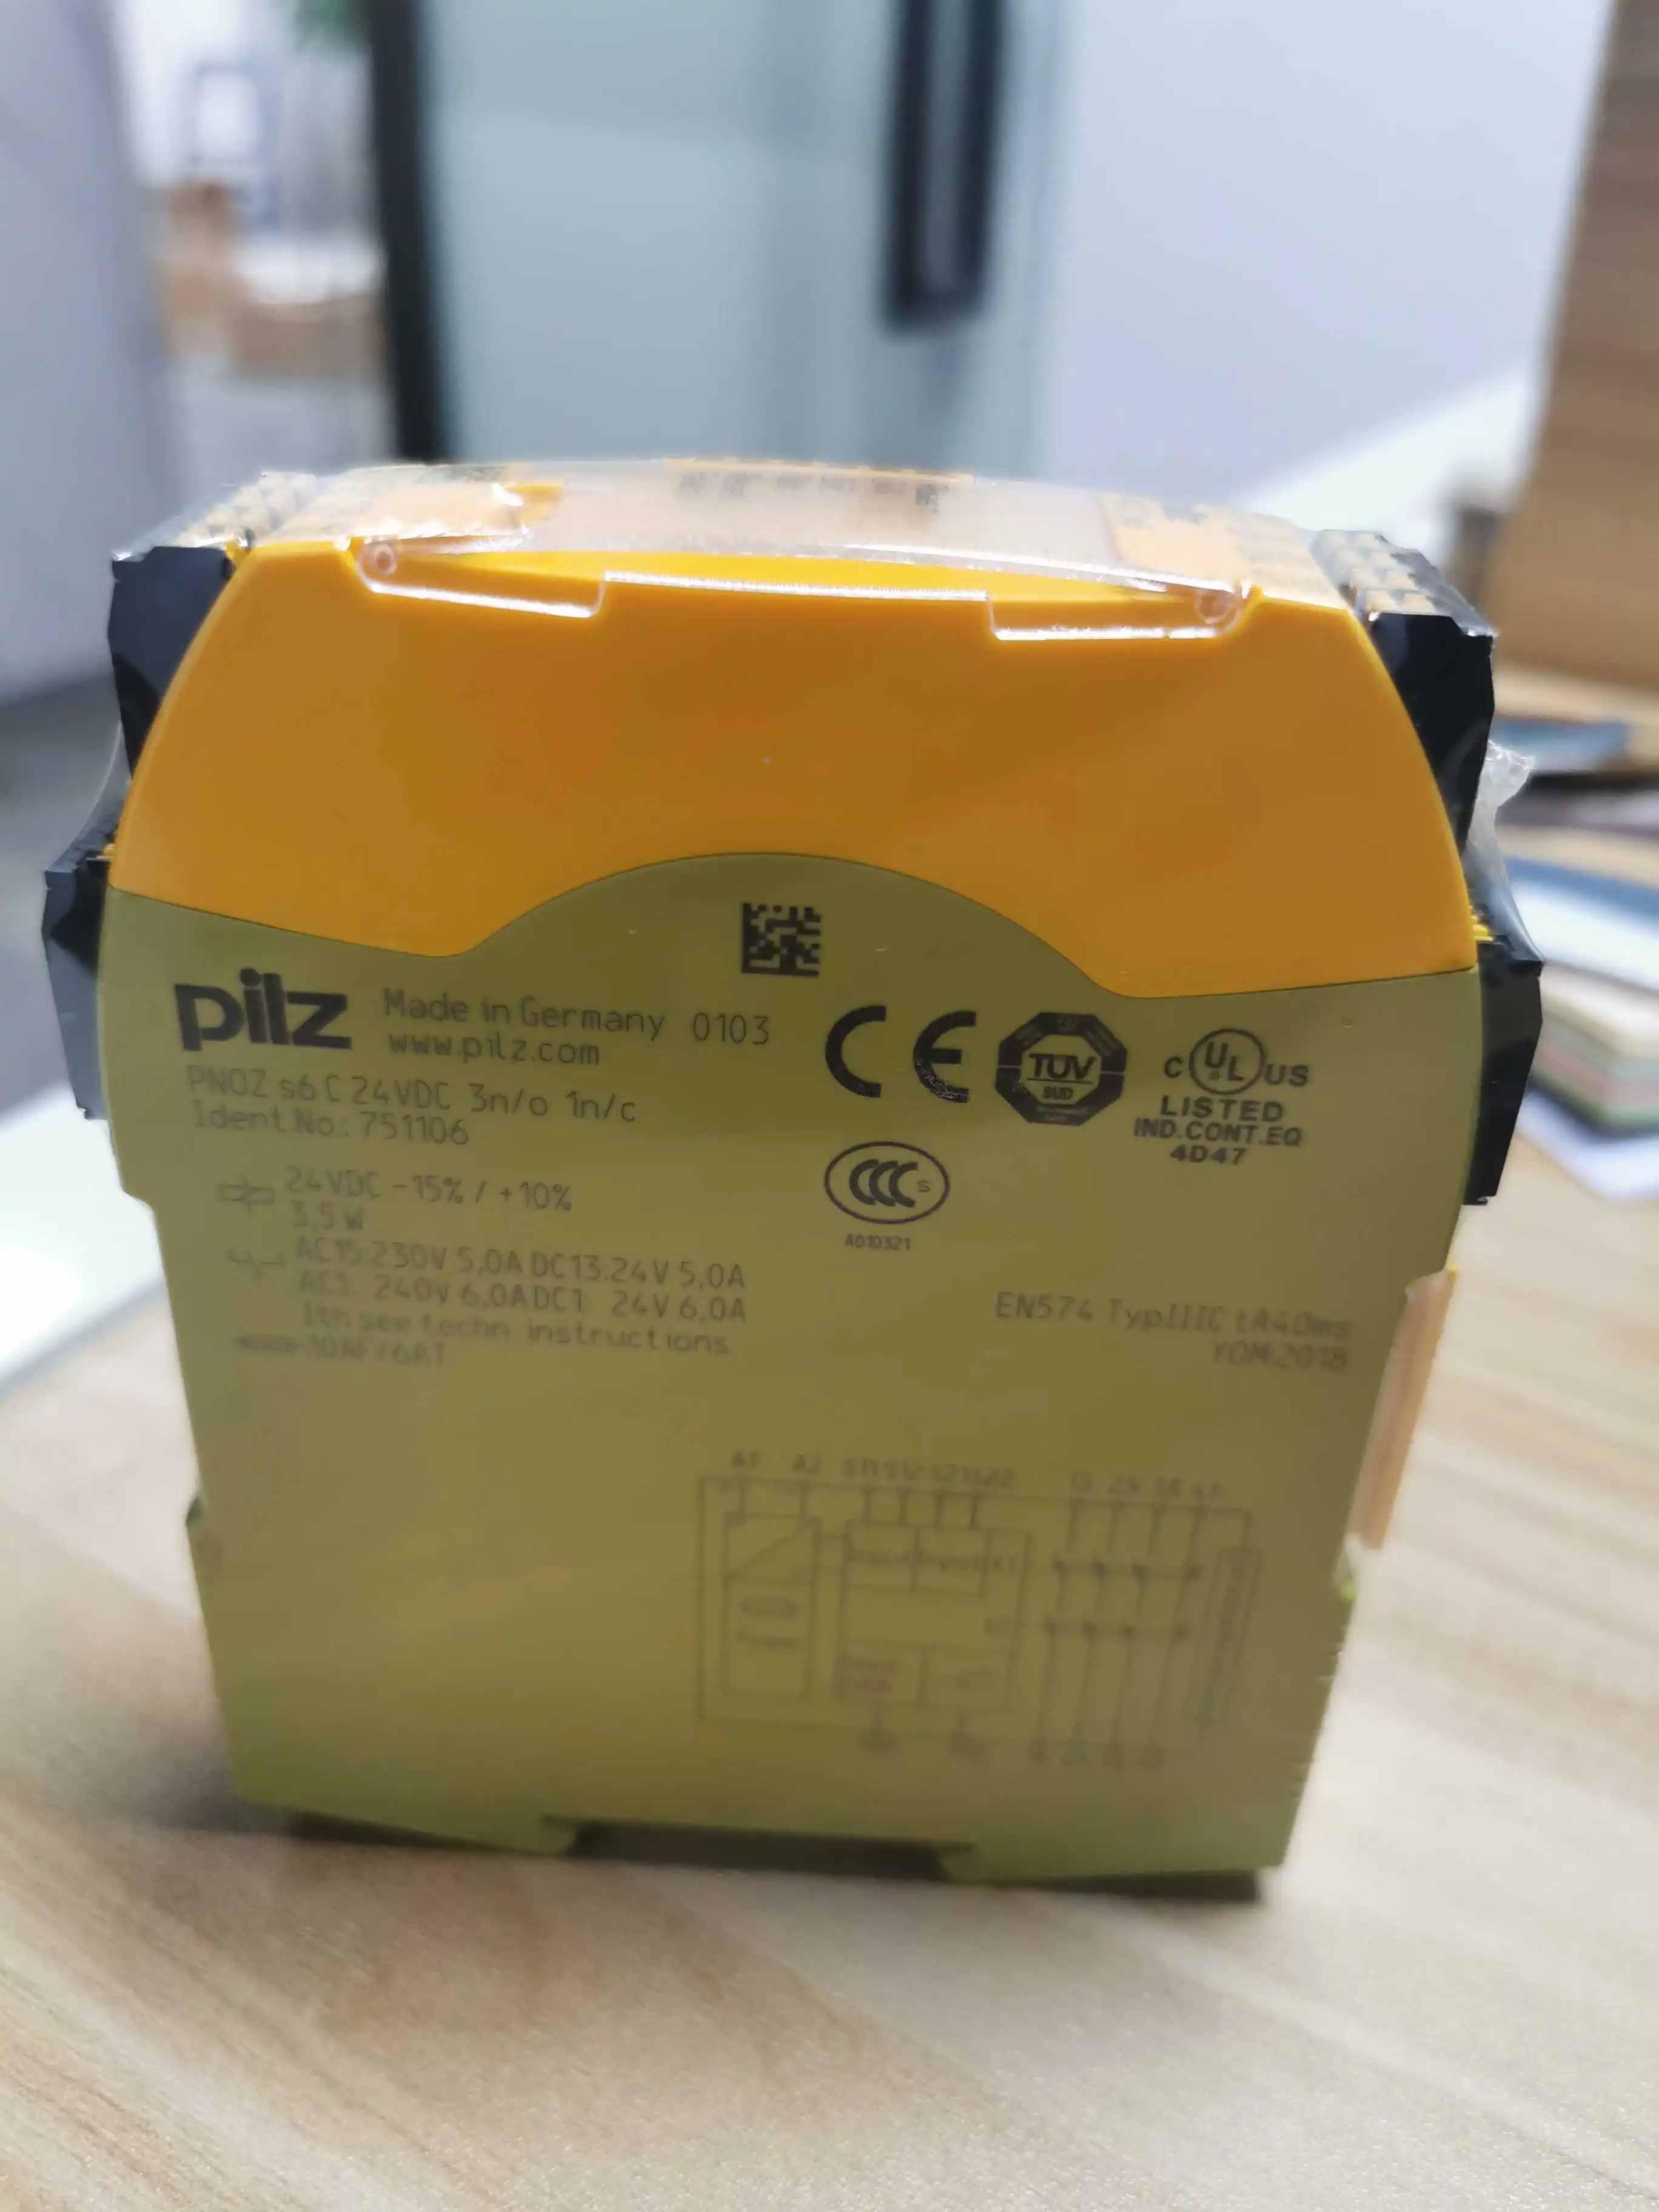 

New Original Safety relay pilz PNOZ s6 c 24VDC 751106